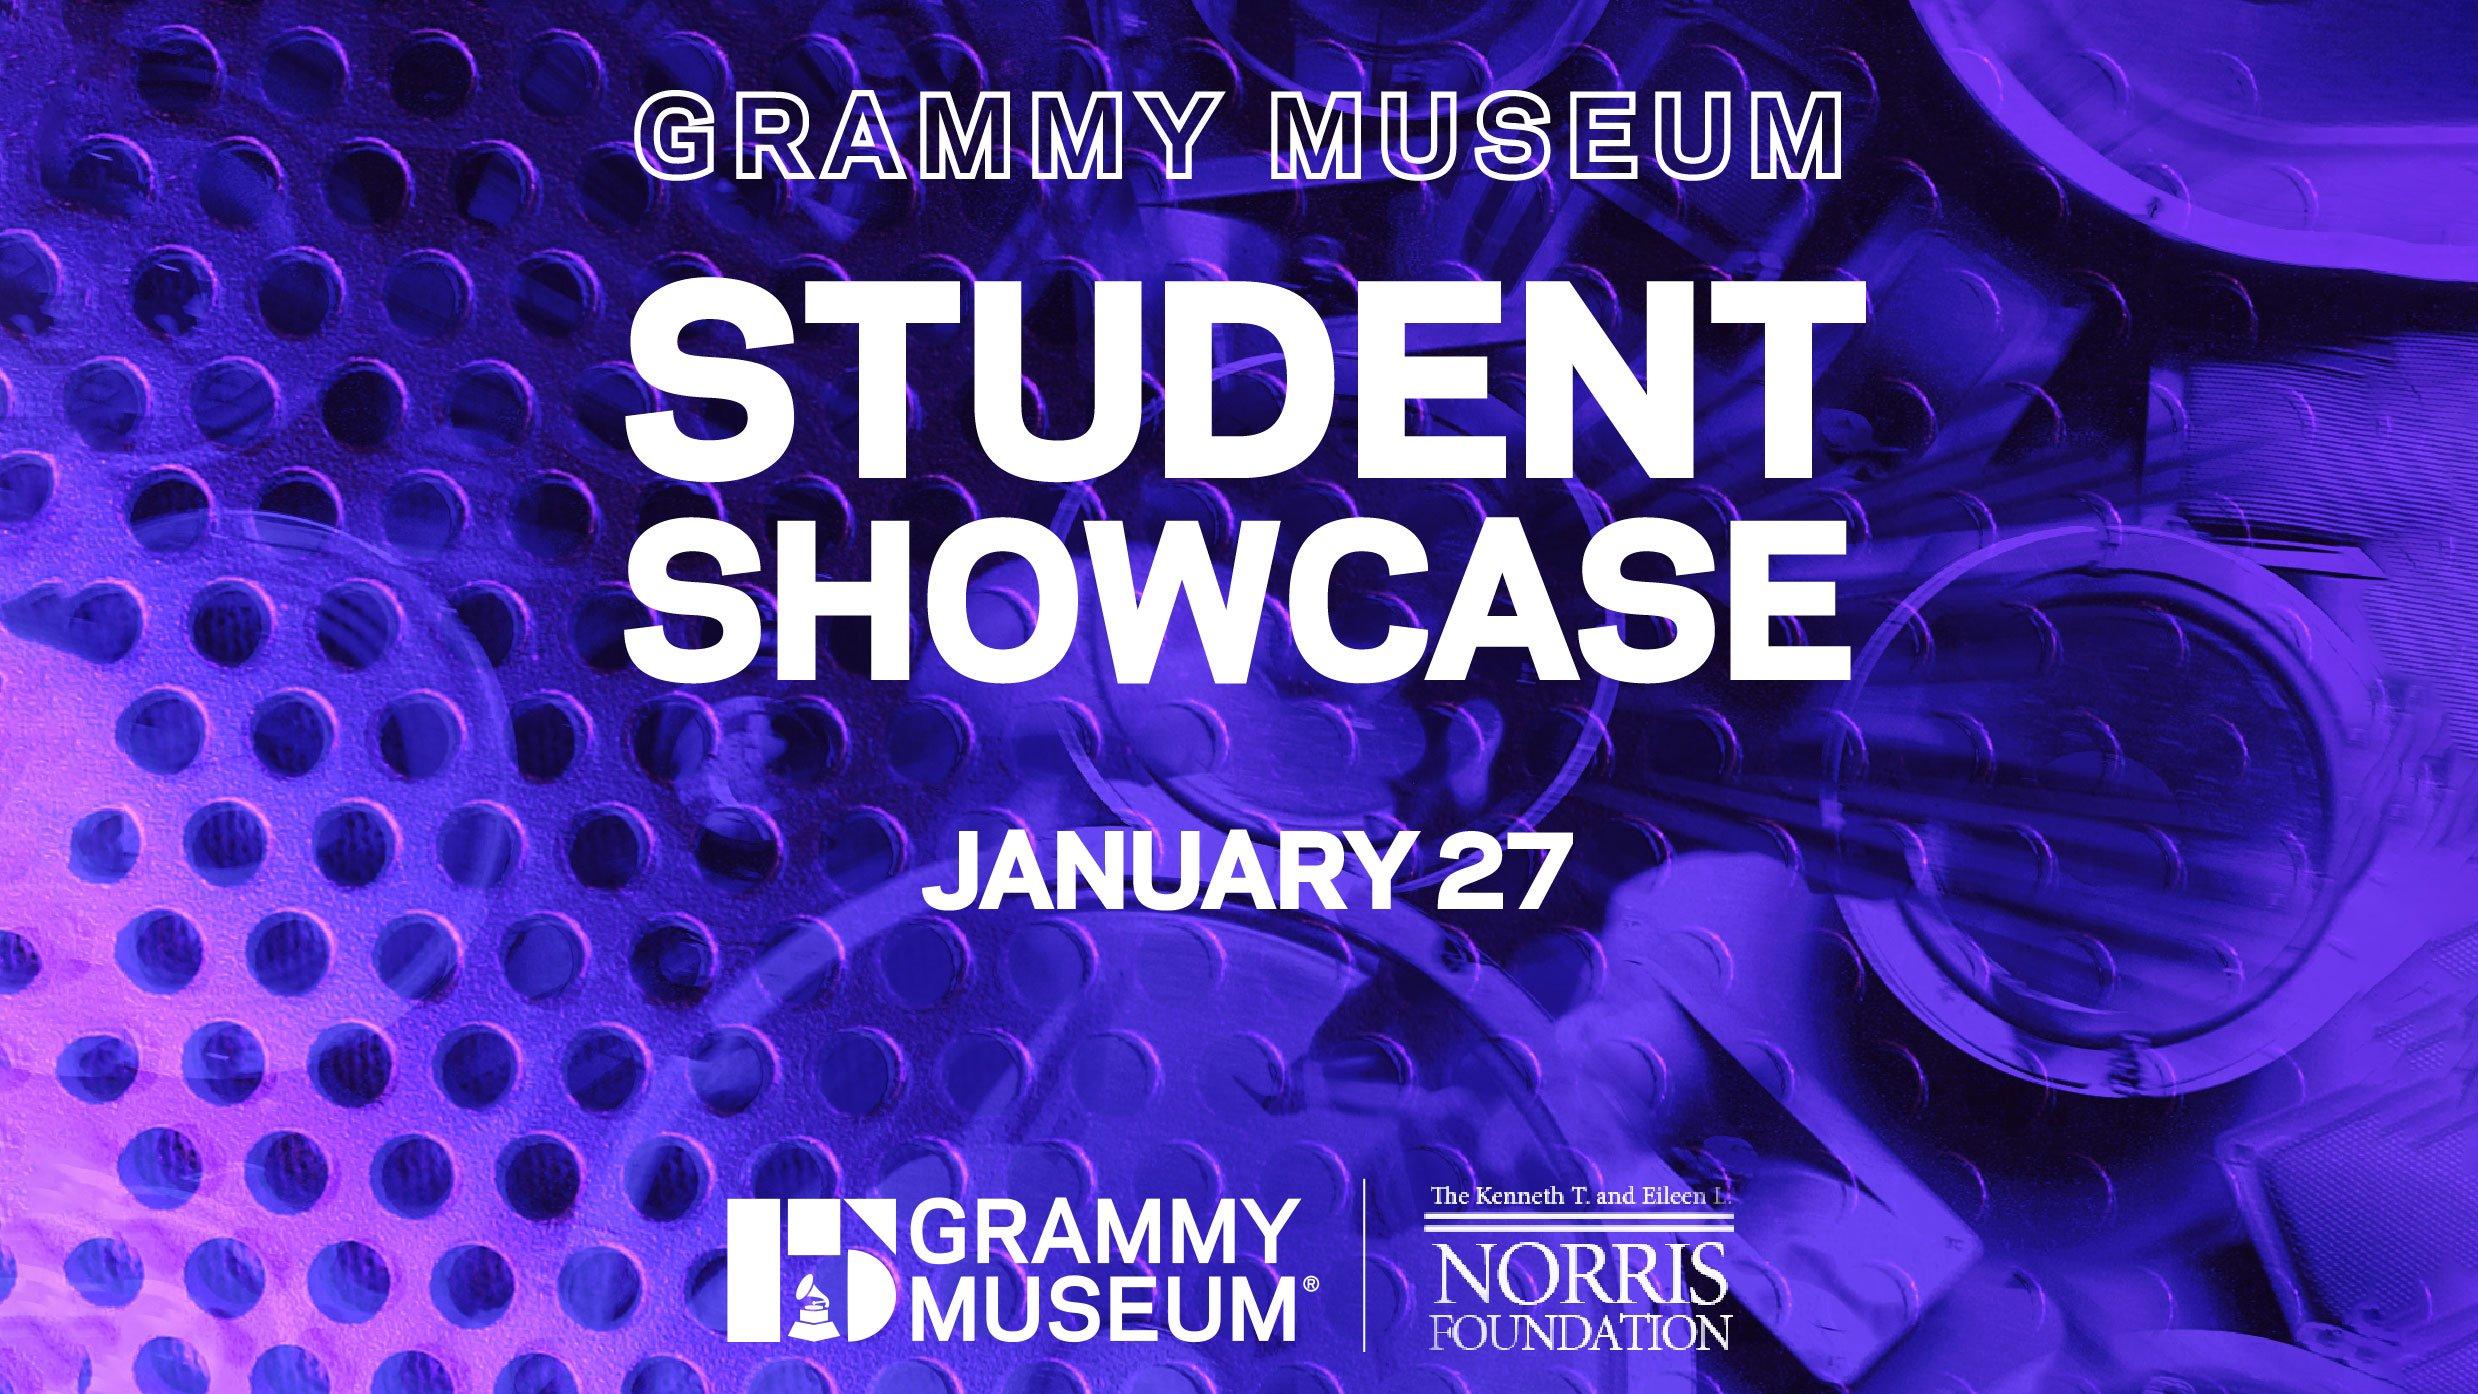 GRAMMY Museum Announces Student Showcase